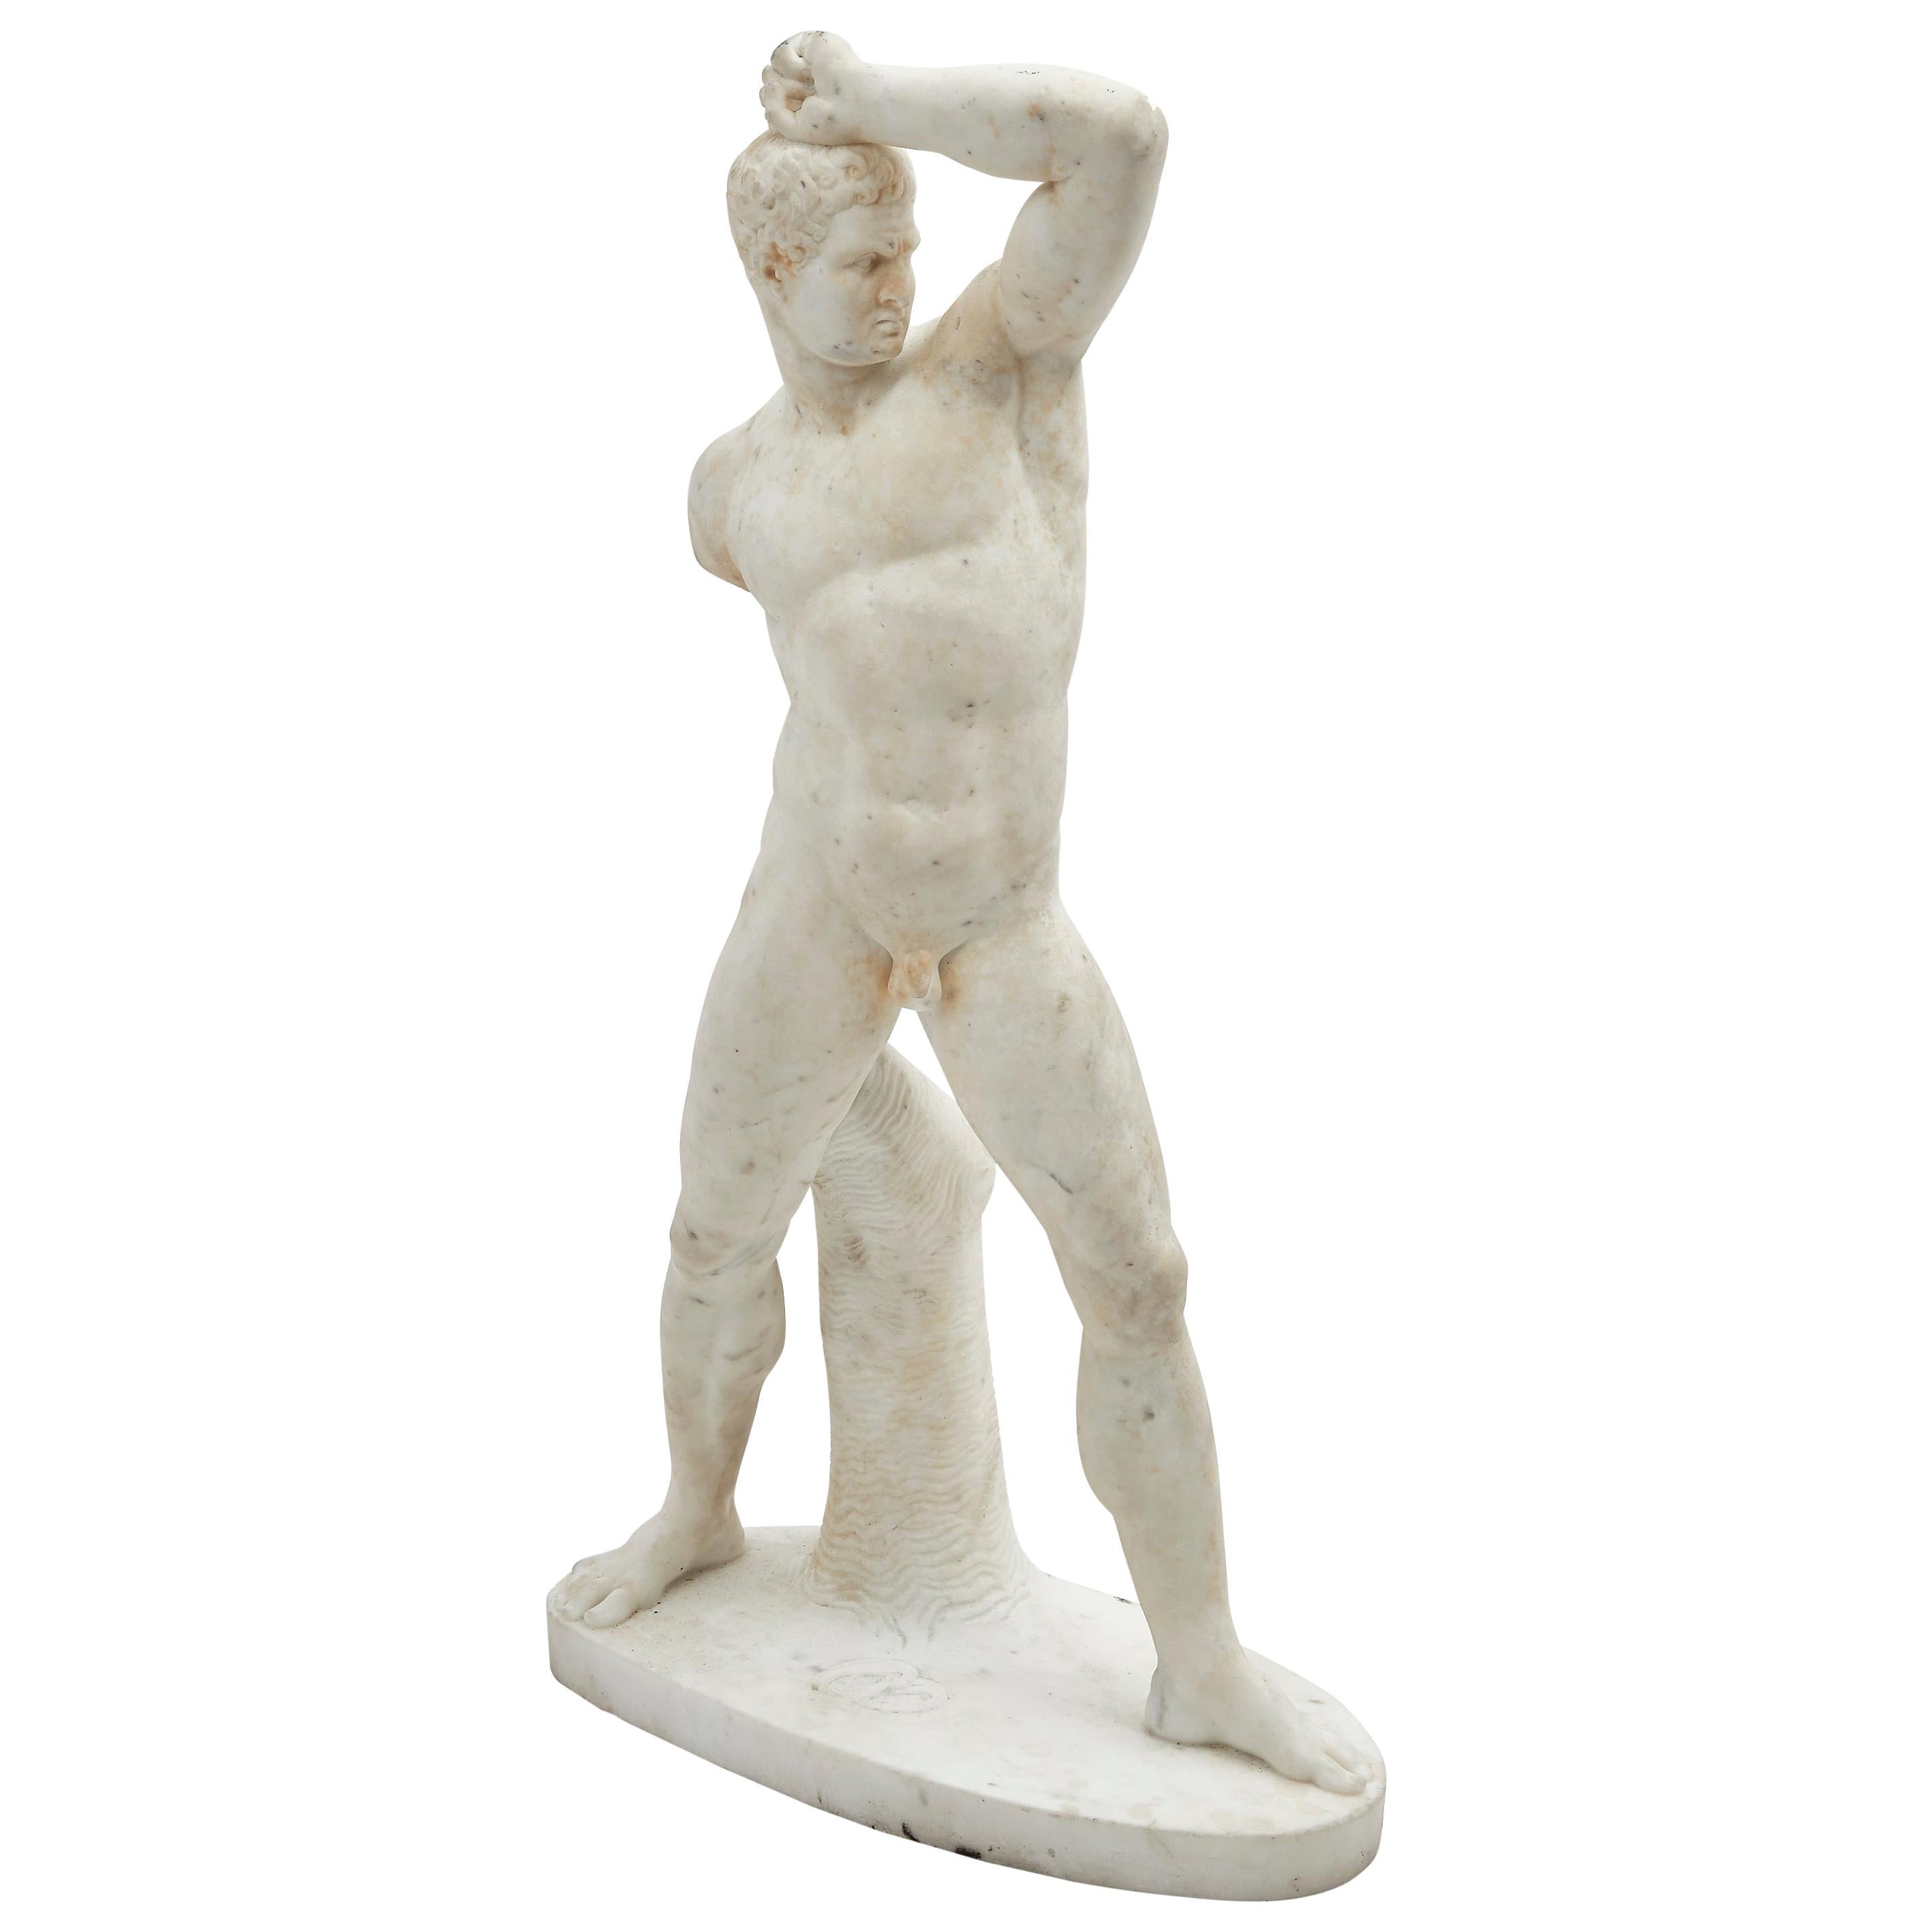 Pietro Franchi Signed White Marble Classical Statue, Italian, 19th Century